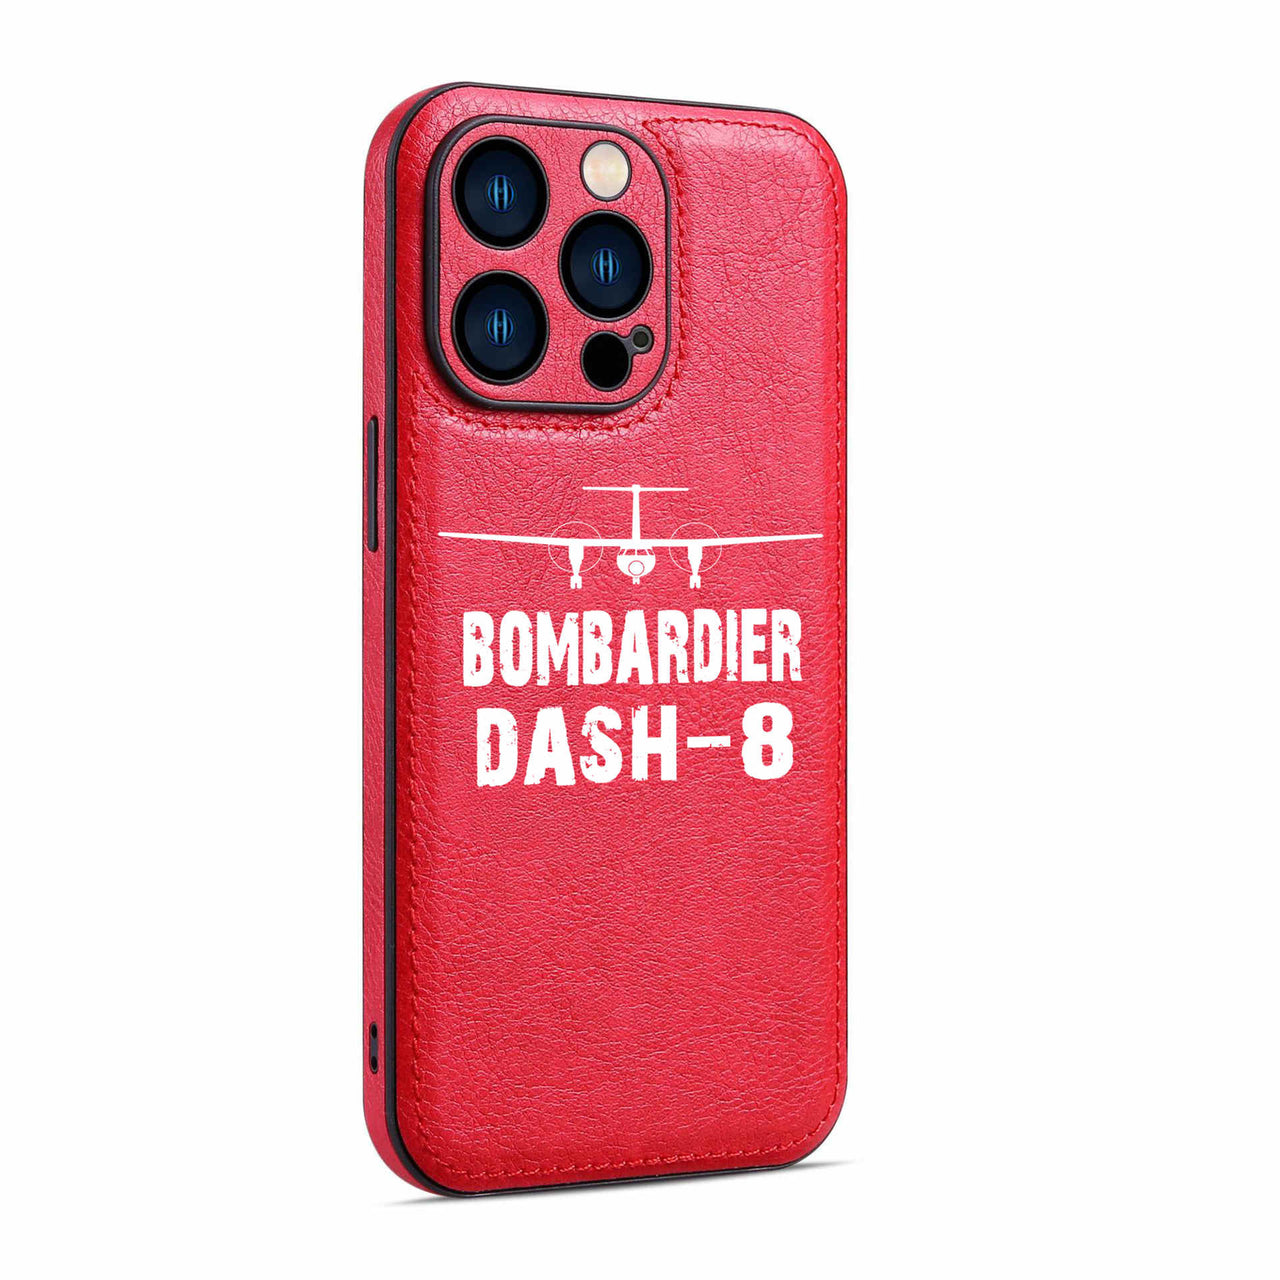 Bombardier Dash-8 & Plane Designed Leather iPhone Cases